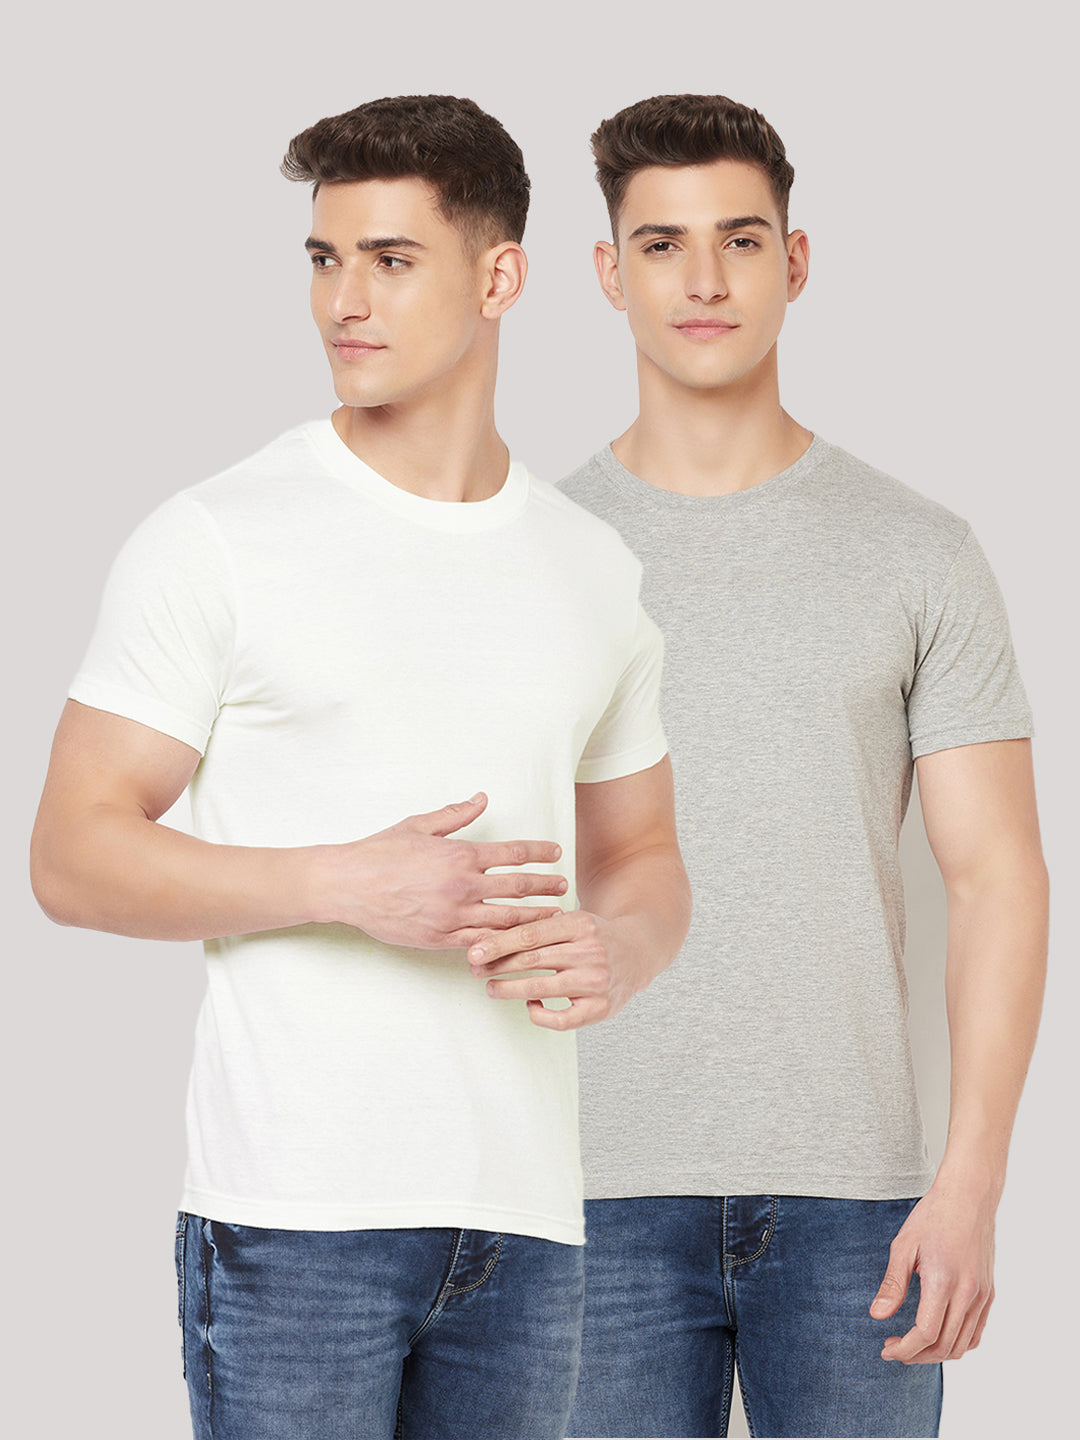 Premium Cotton Tshirts  (Pack of 2- White,Grey)